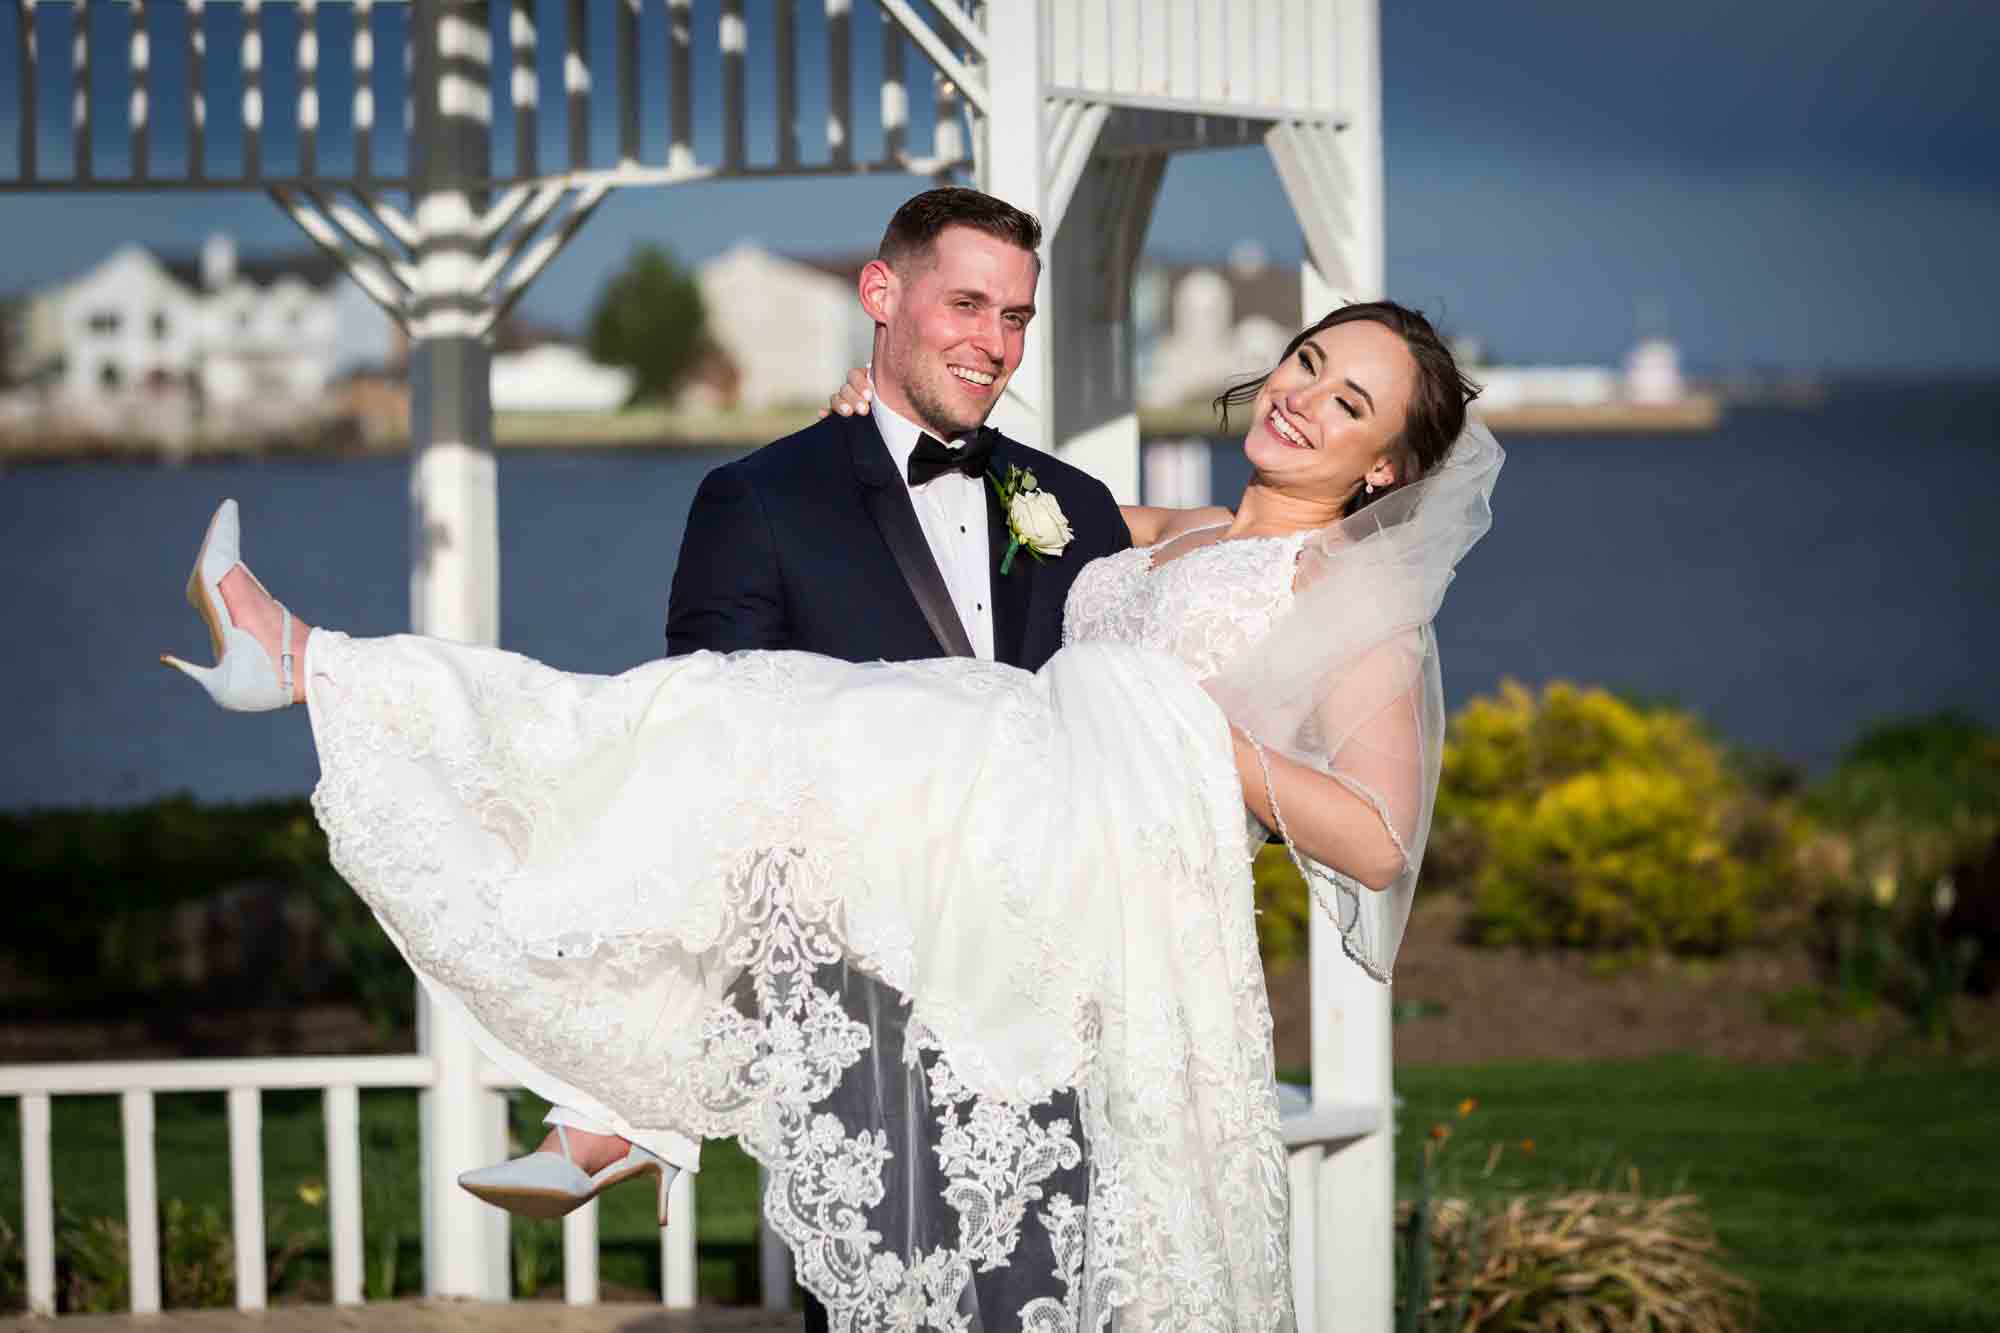 Groom holding bride in front of white gazebo